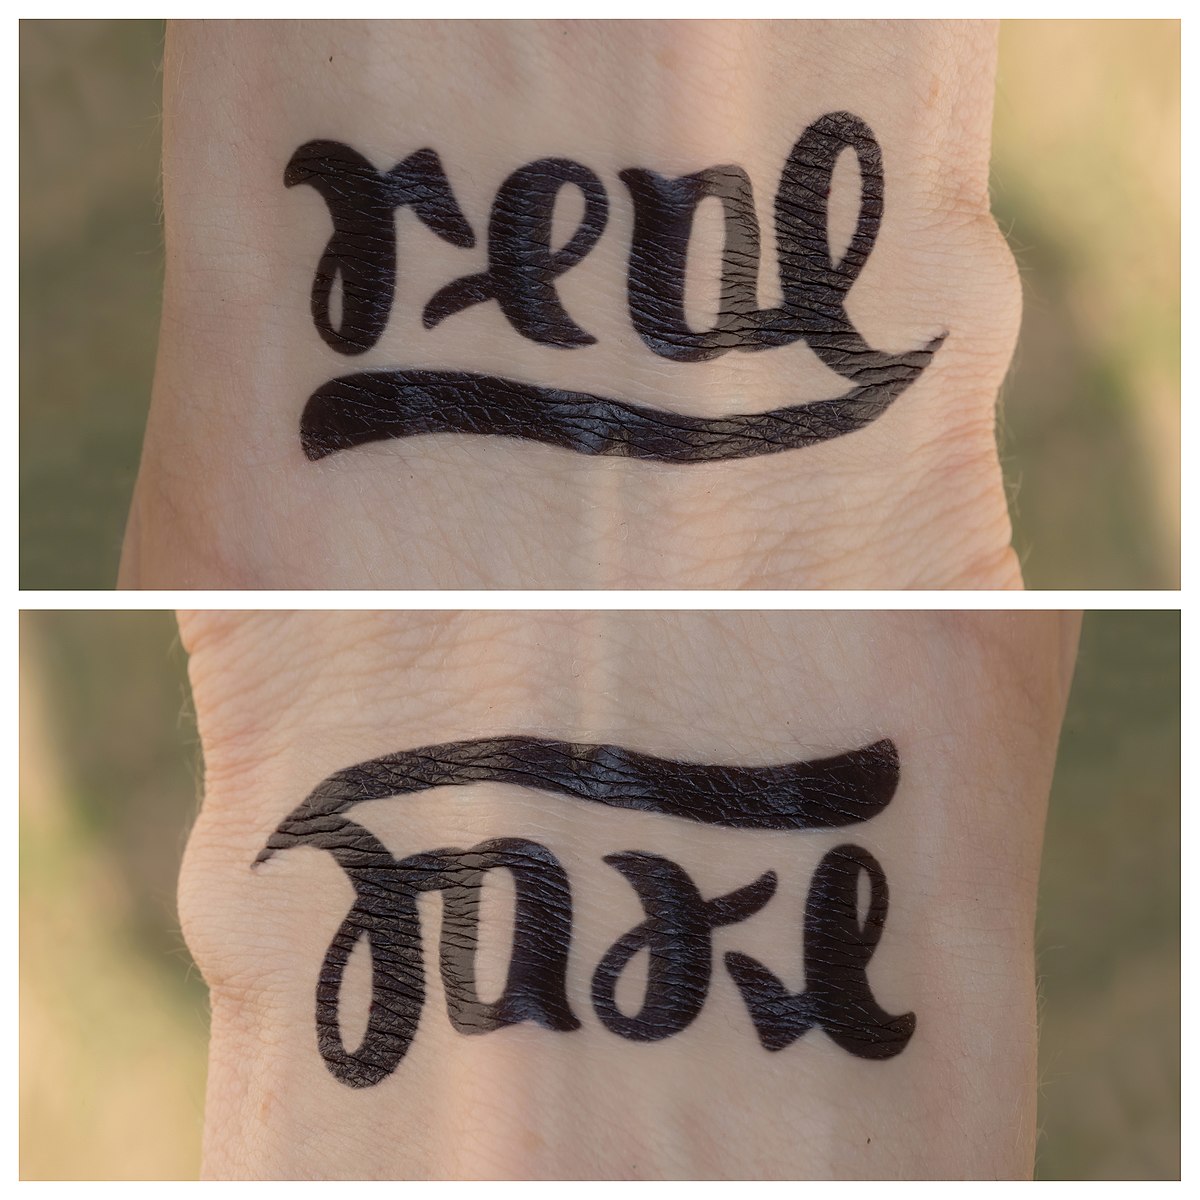 File:Ambigram tattoo Real Fake (2) - comparison.jpg - Wikimedia Commons